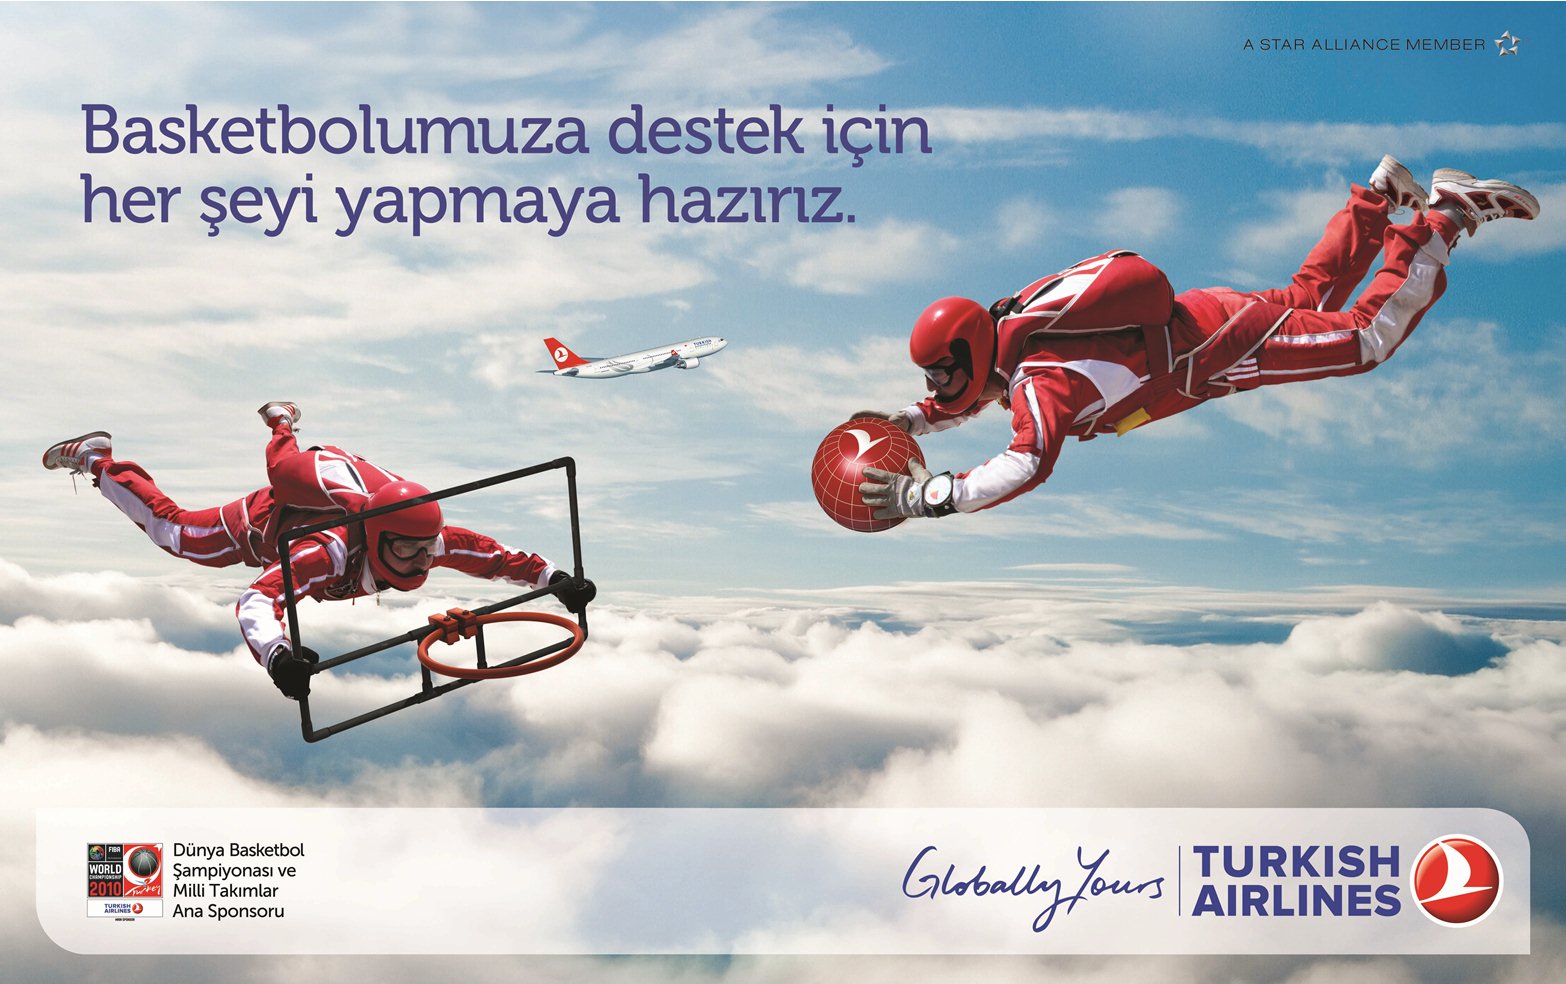 Anadolujet Uşak - Niğde Uçak Bileti Telefon